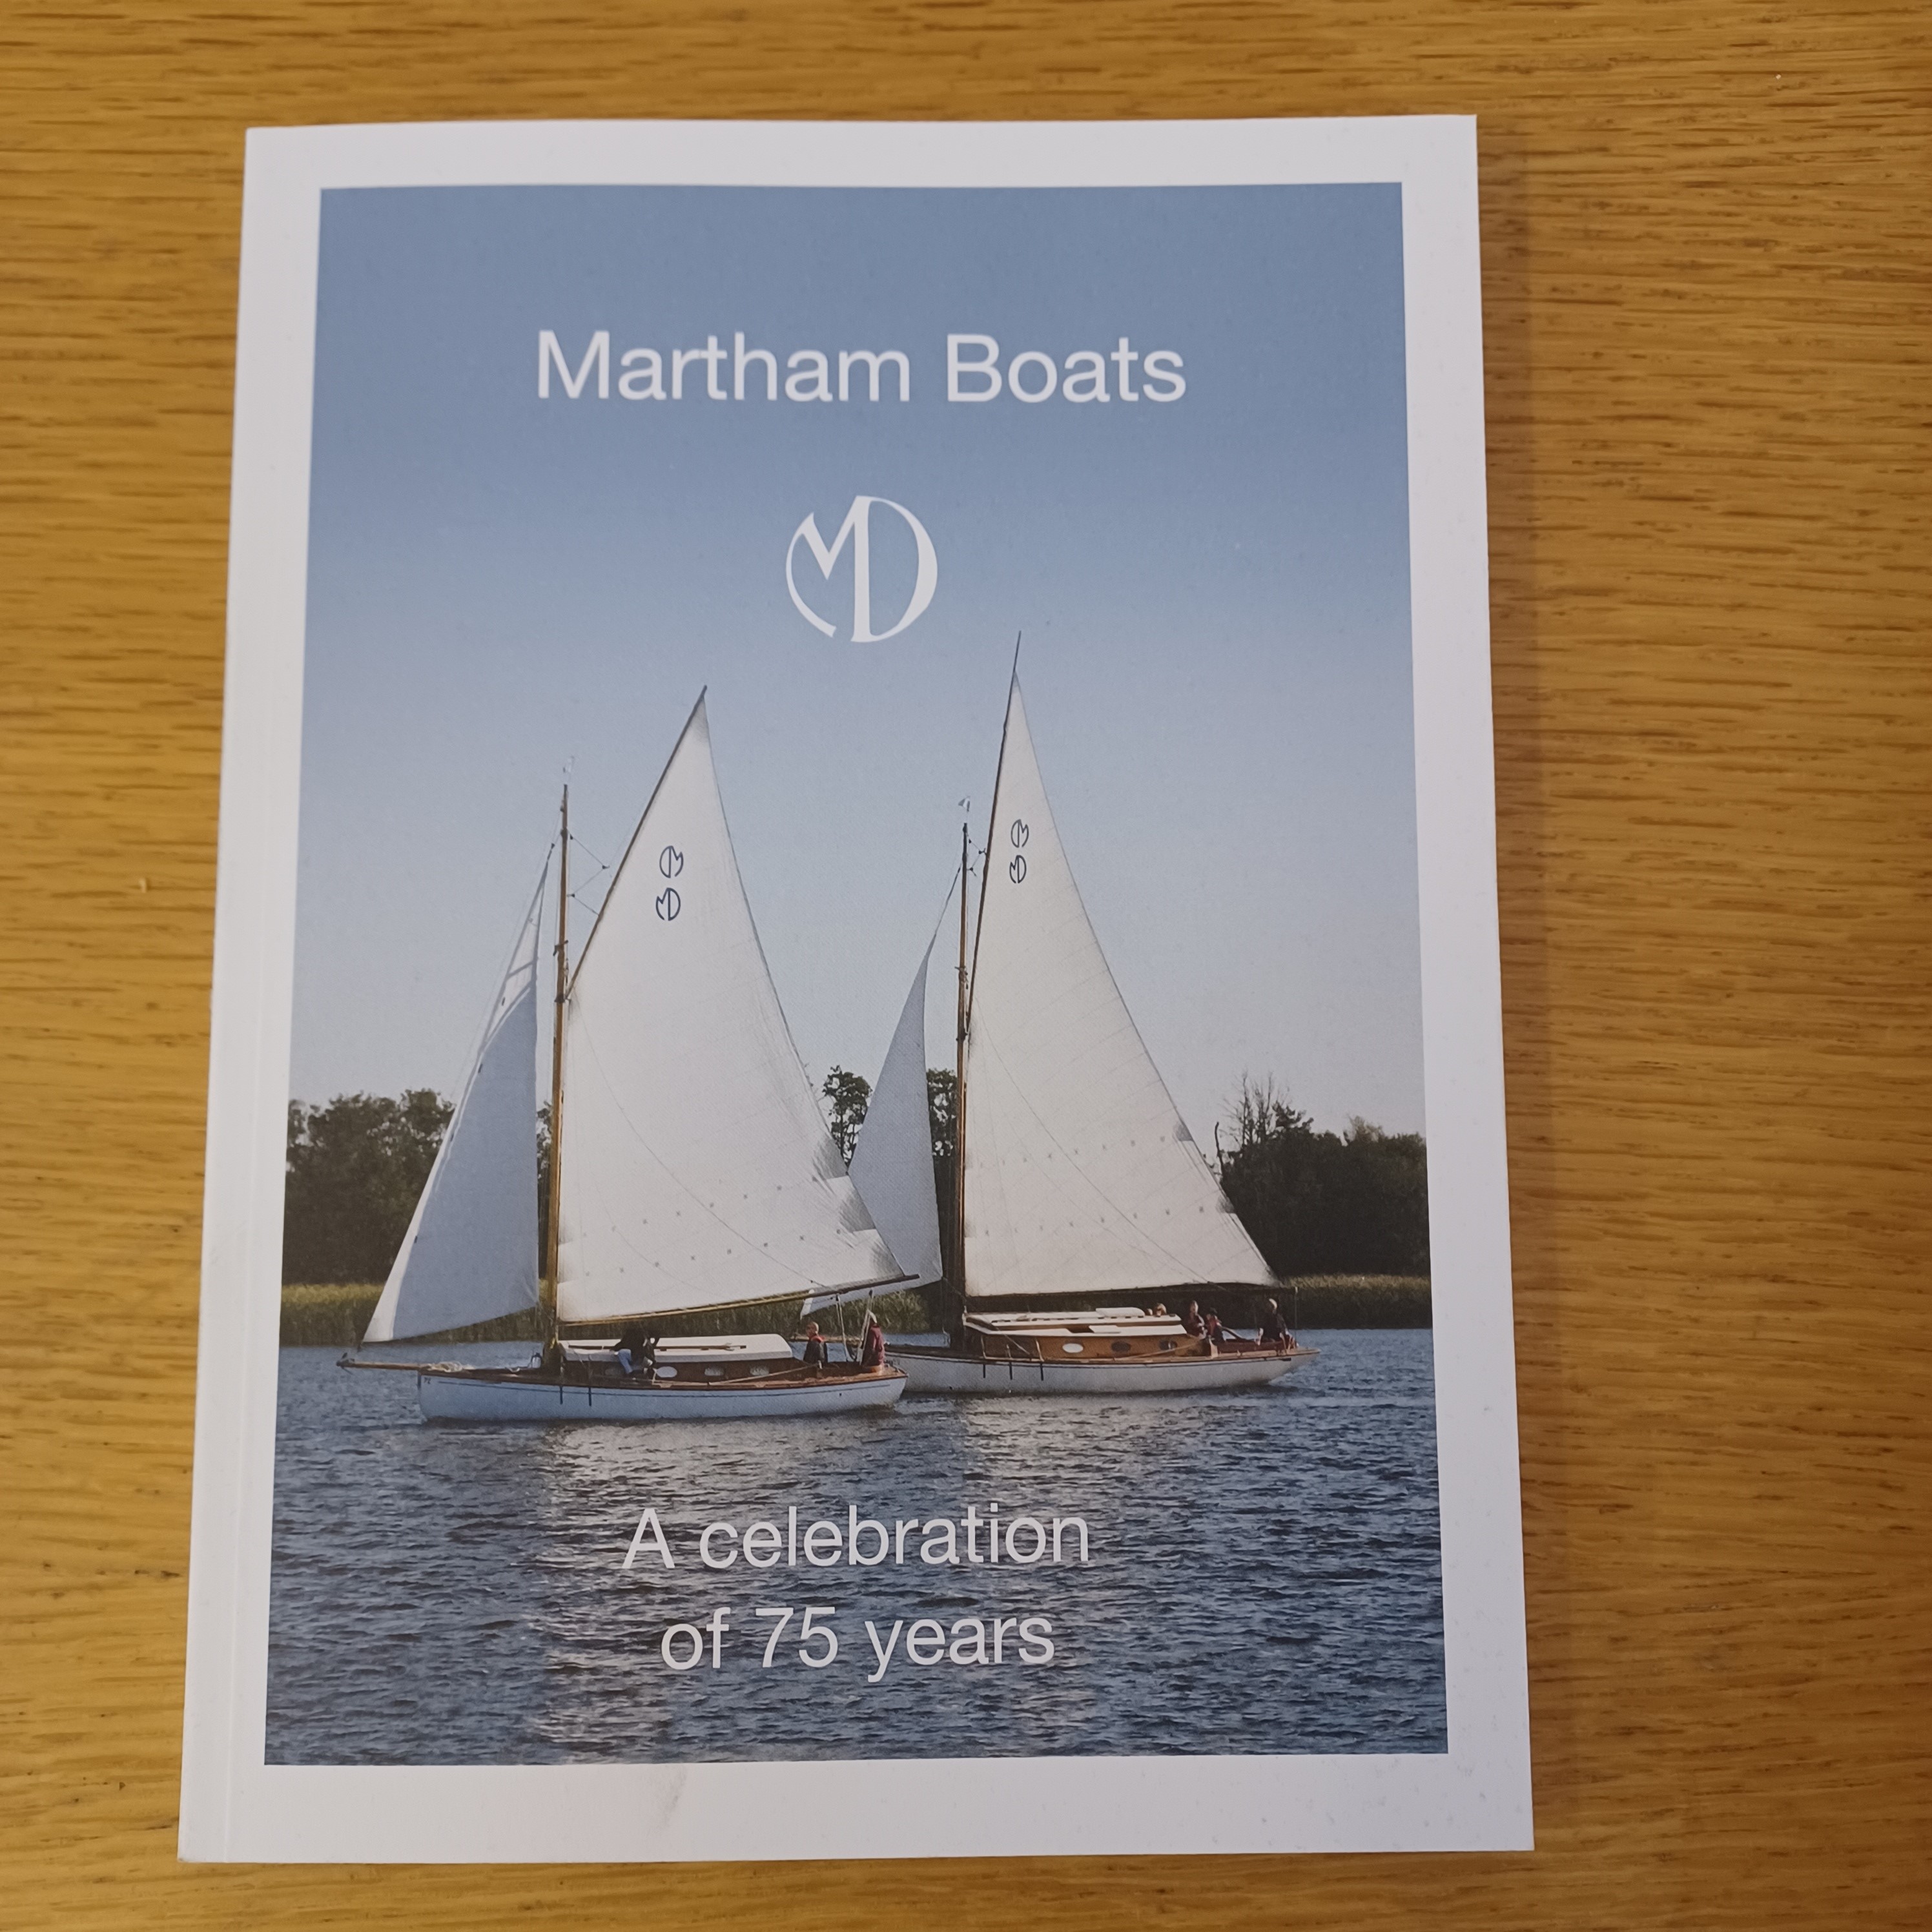 The History of Martham Boats 75 Years Celebration